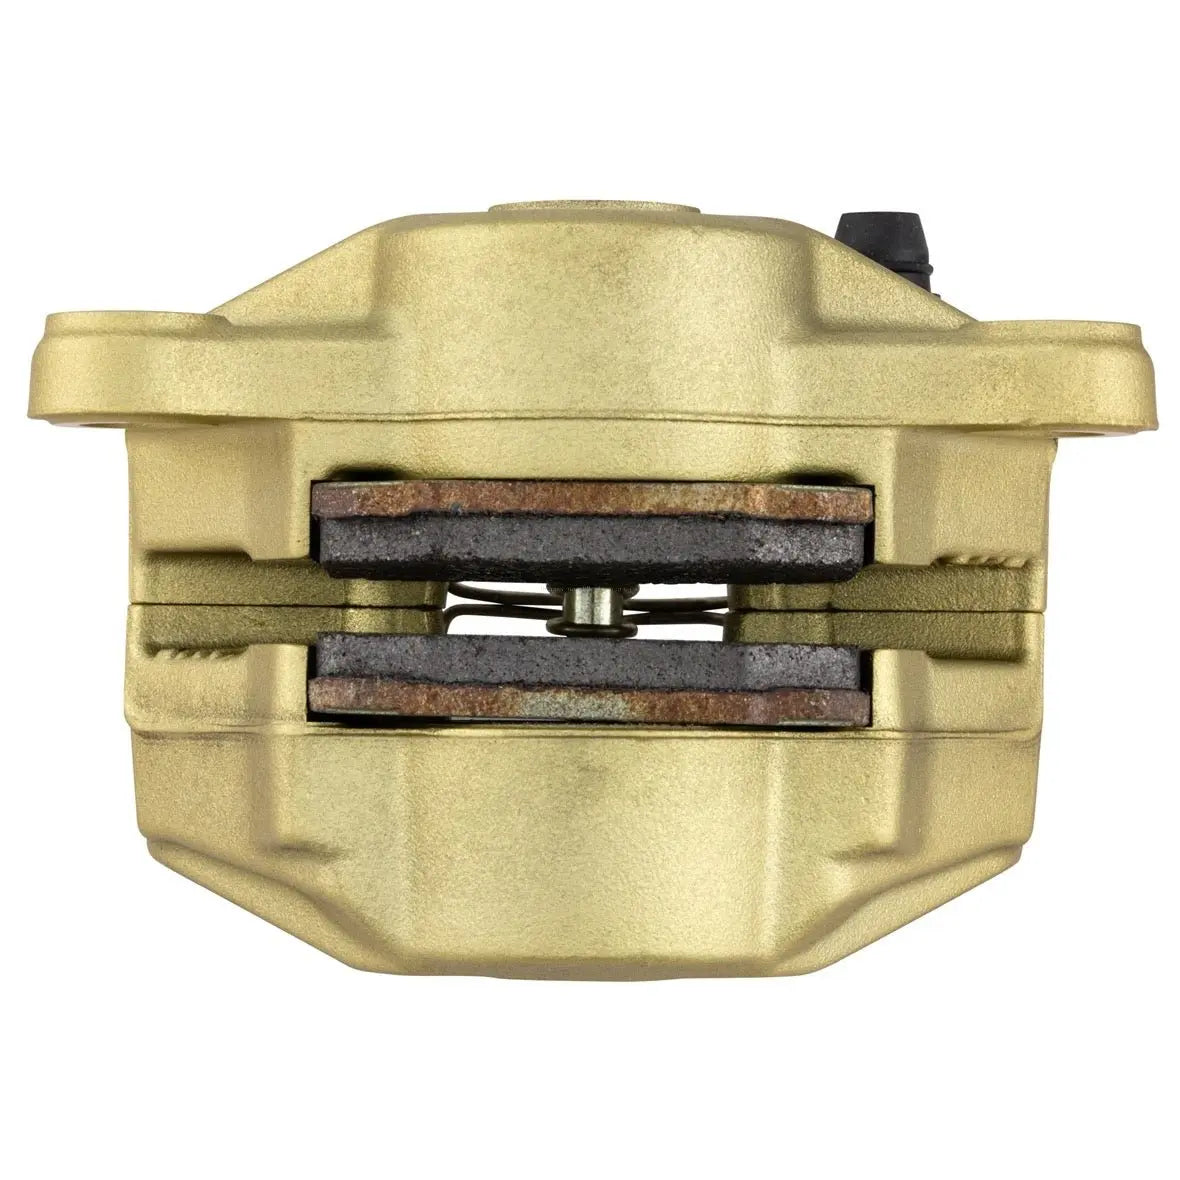 Brake Calliper BREMBO Gold Front + Zelioni Adapter Black | Vespa SXL/LX/LXV/S 50-150 Brembo 220.34 Falan Parts